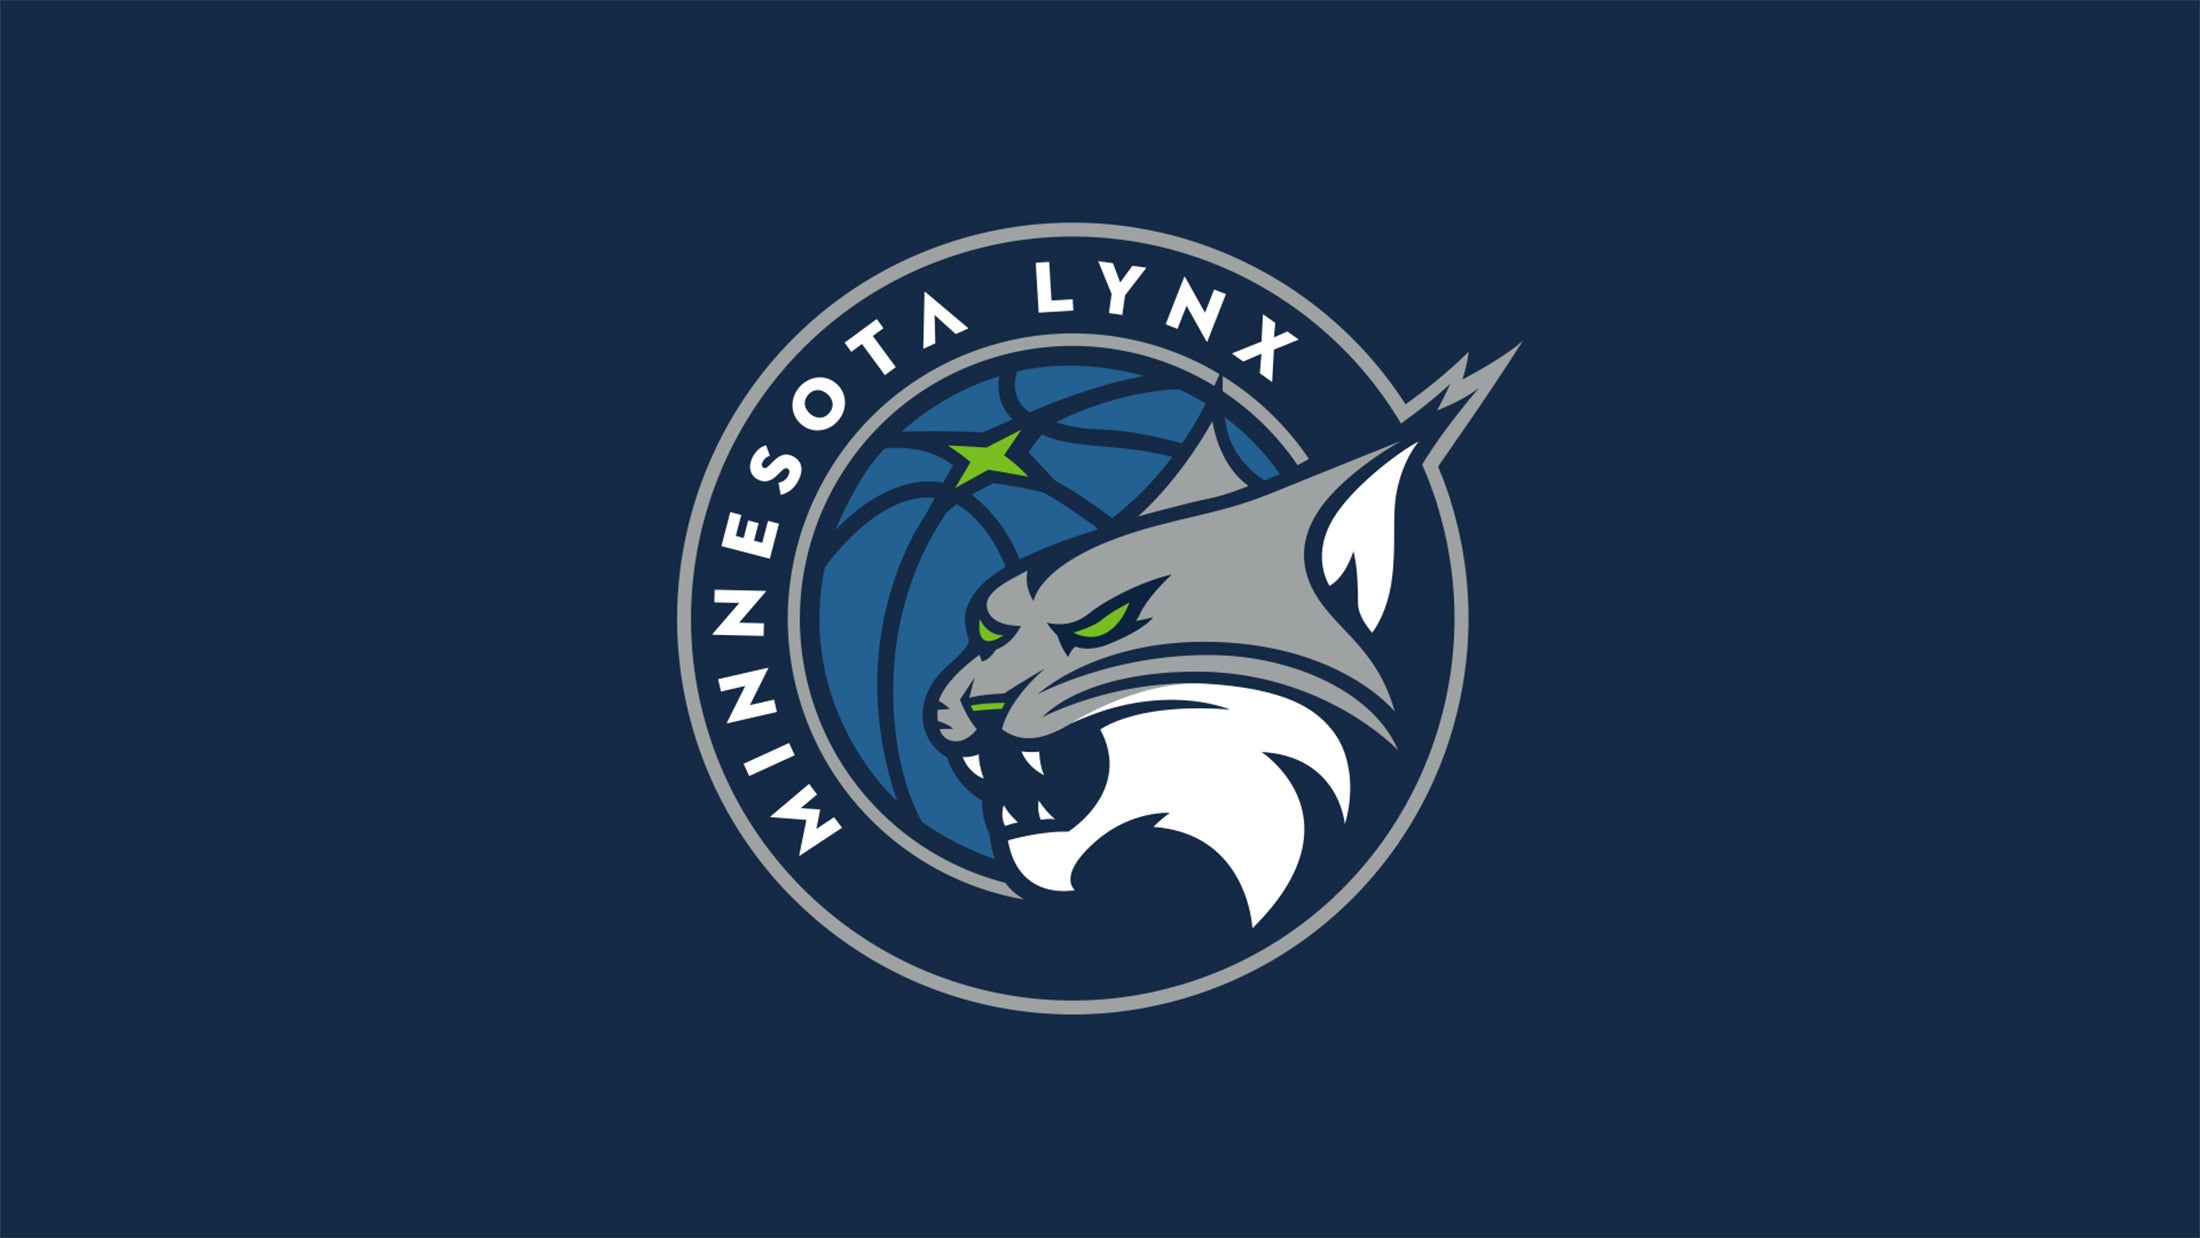 Minnesota Lynx vs. Los Angeles Sparks at Target Center